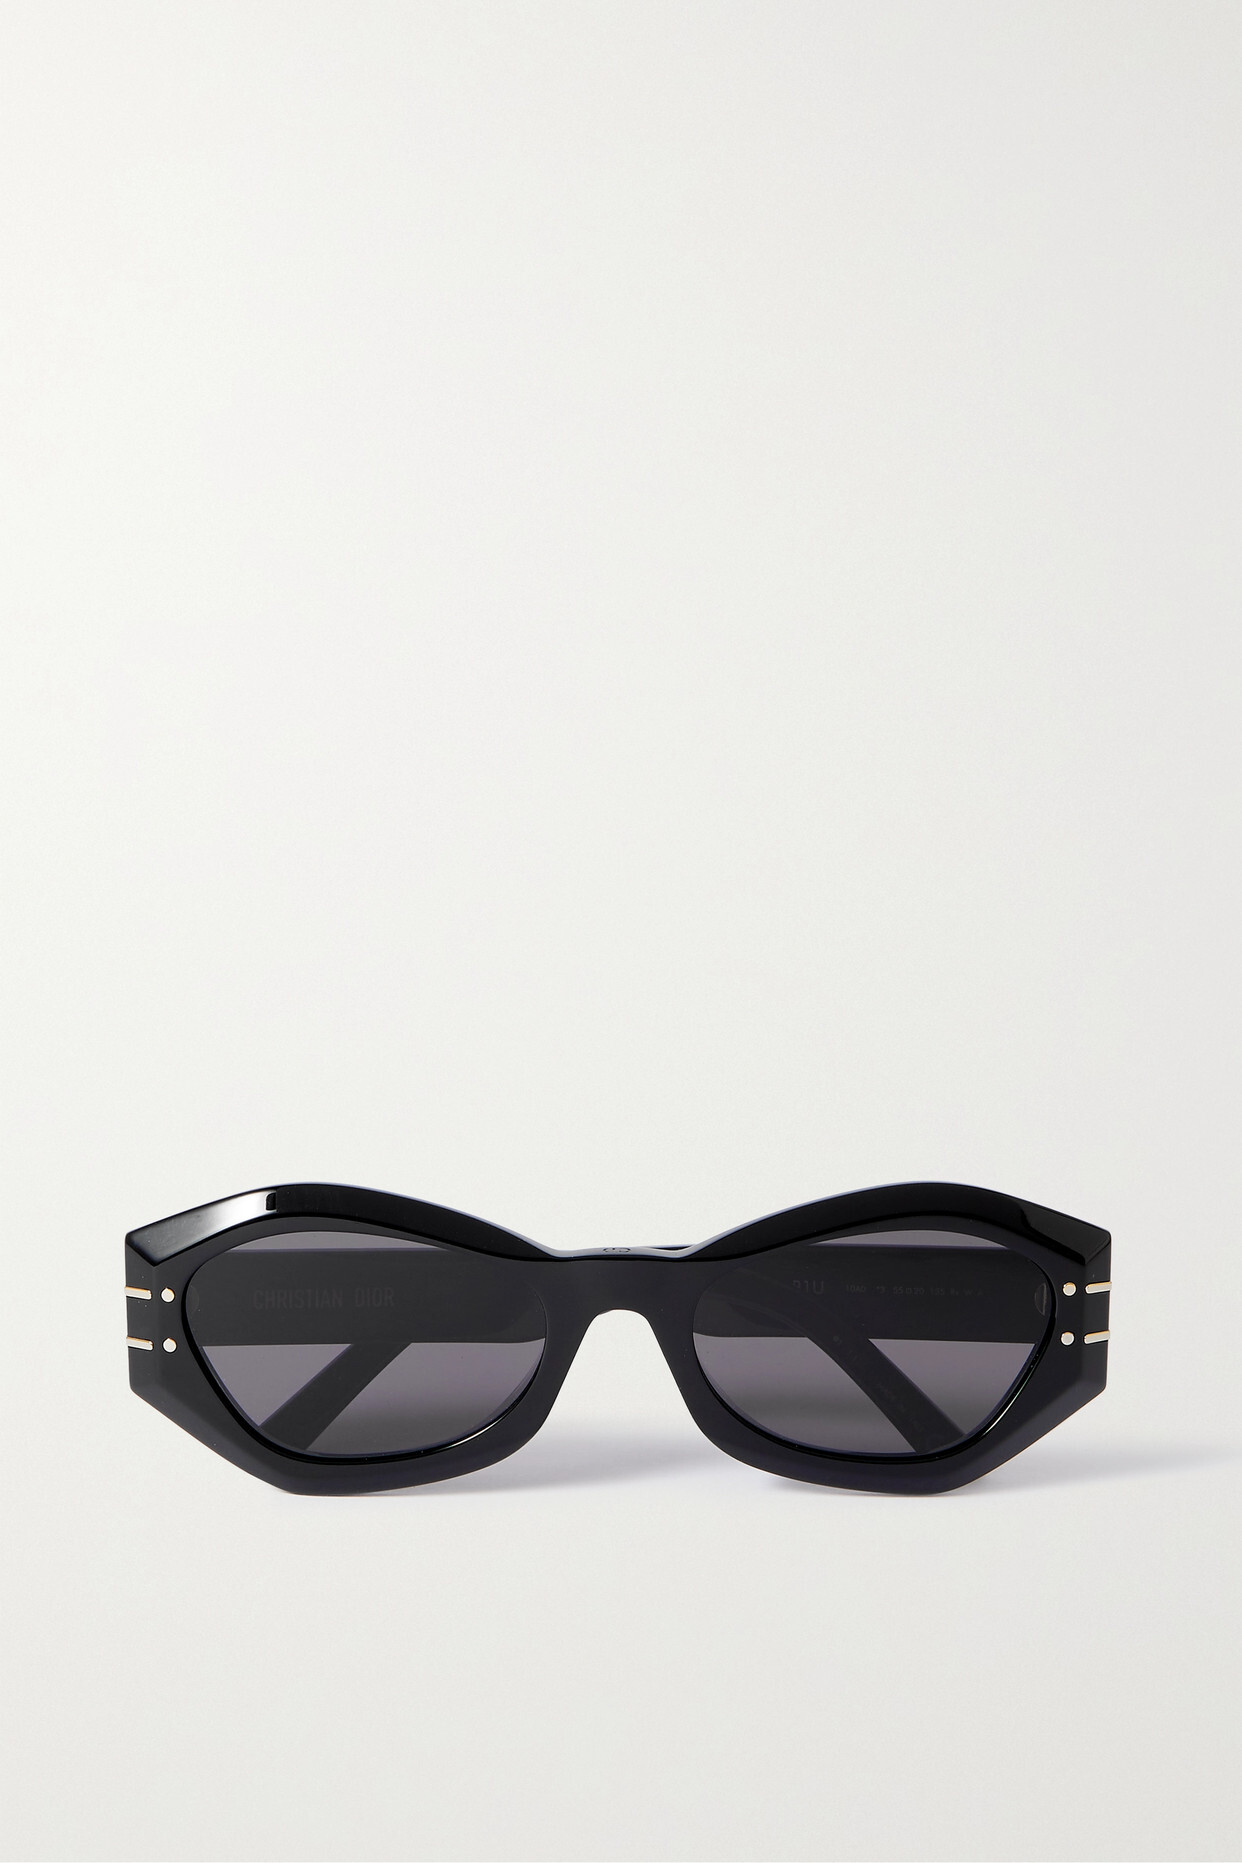 DIOR Eyewear - Diorsignature B1u Cat-eye Acetate Sunglasses - Black